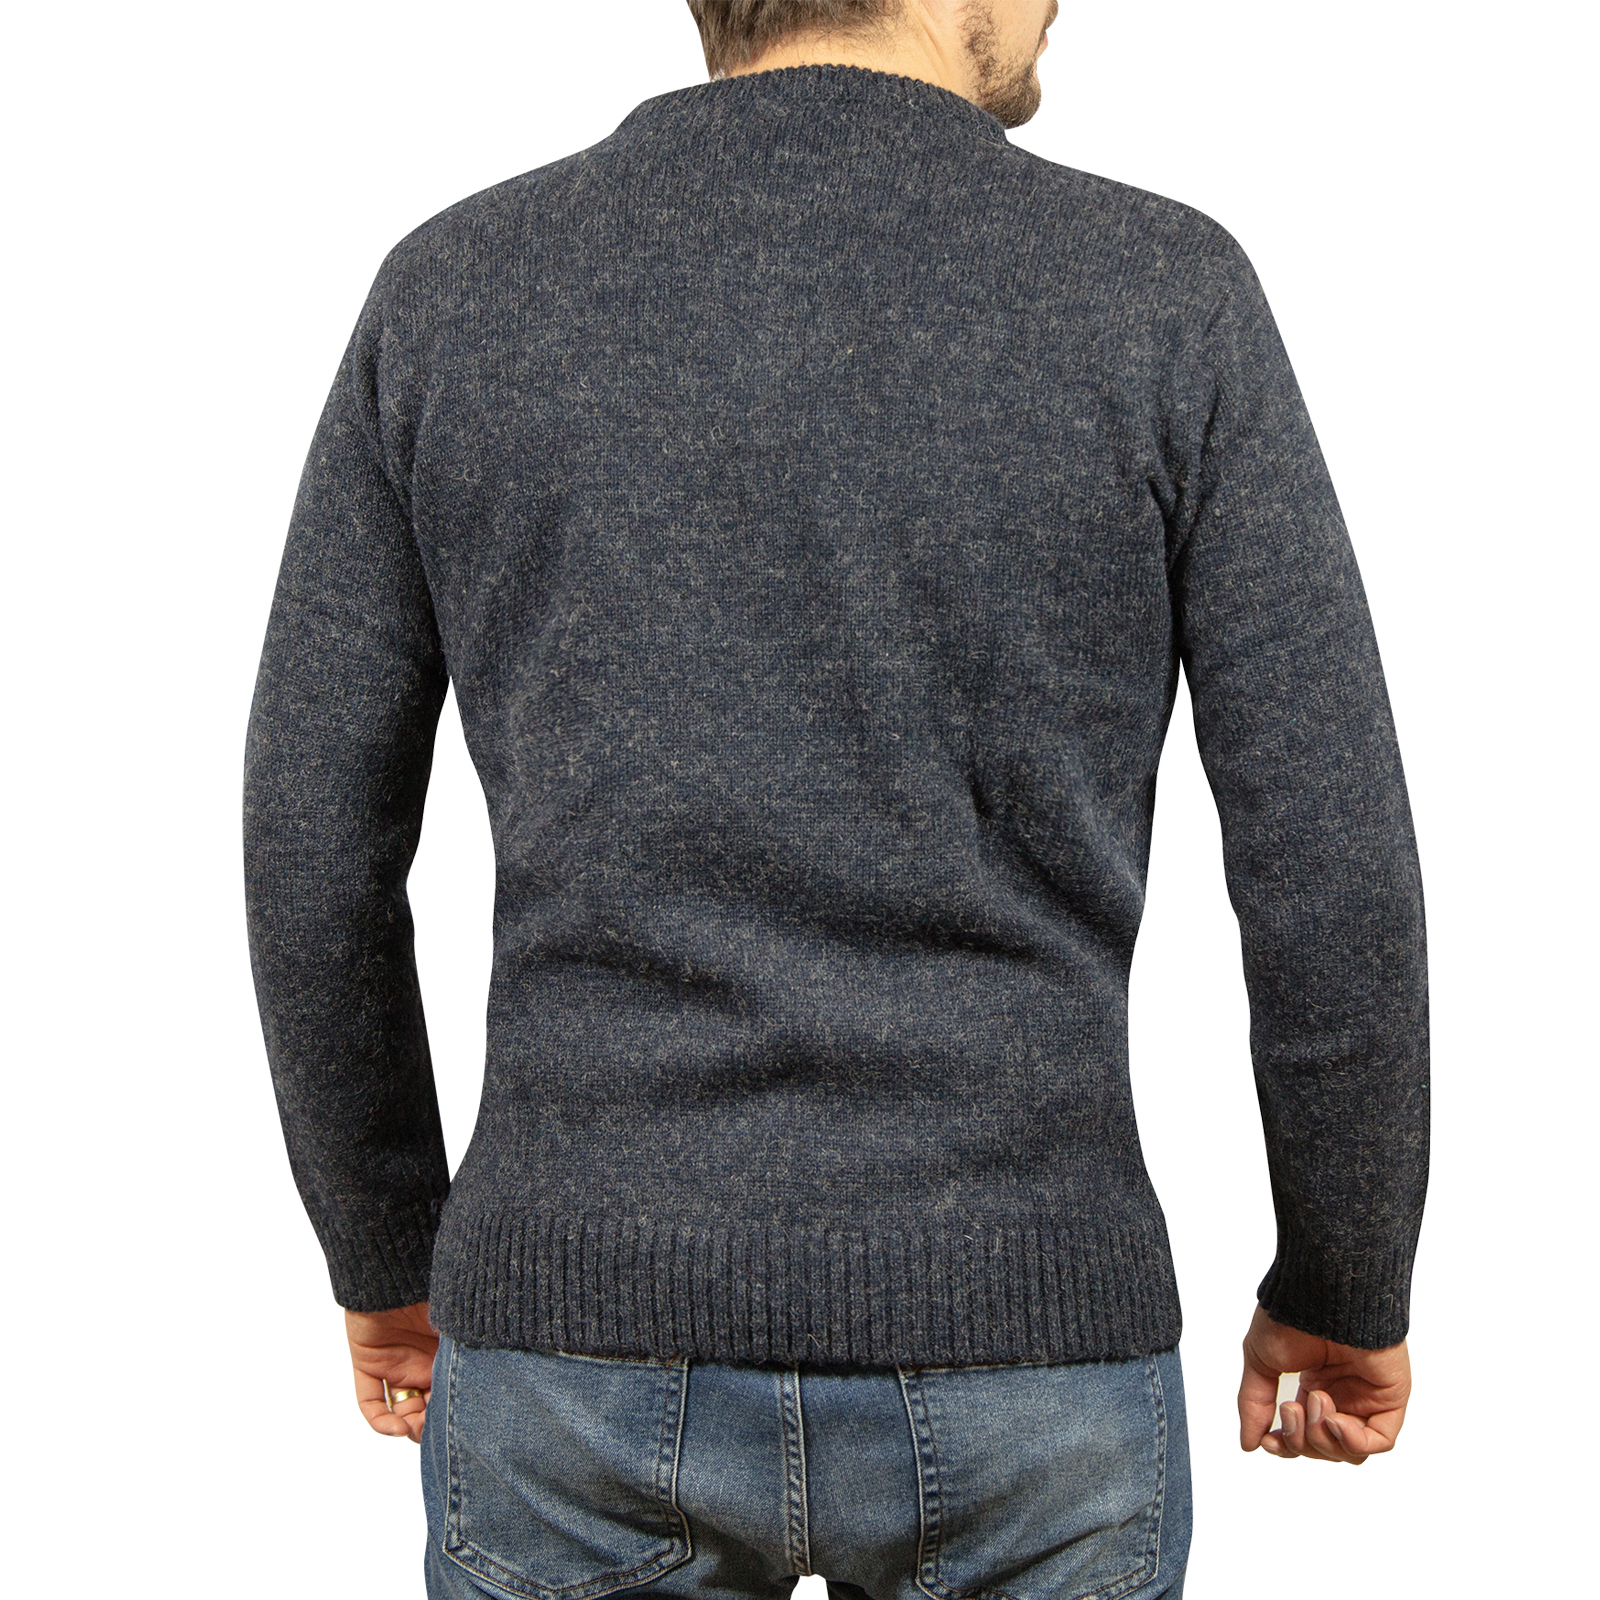 100% SHETLAND WOOL CREW Round Neck Knit JUMPER Pullover Mens Sweater ...